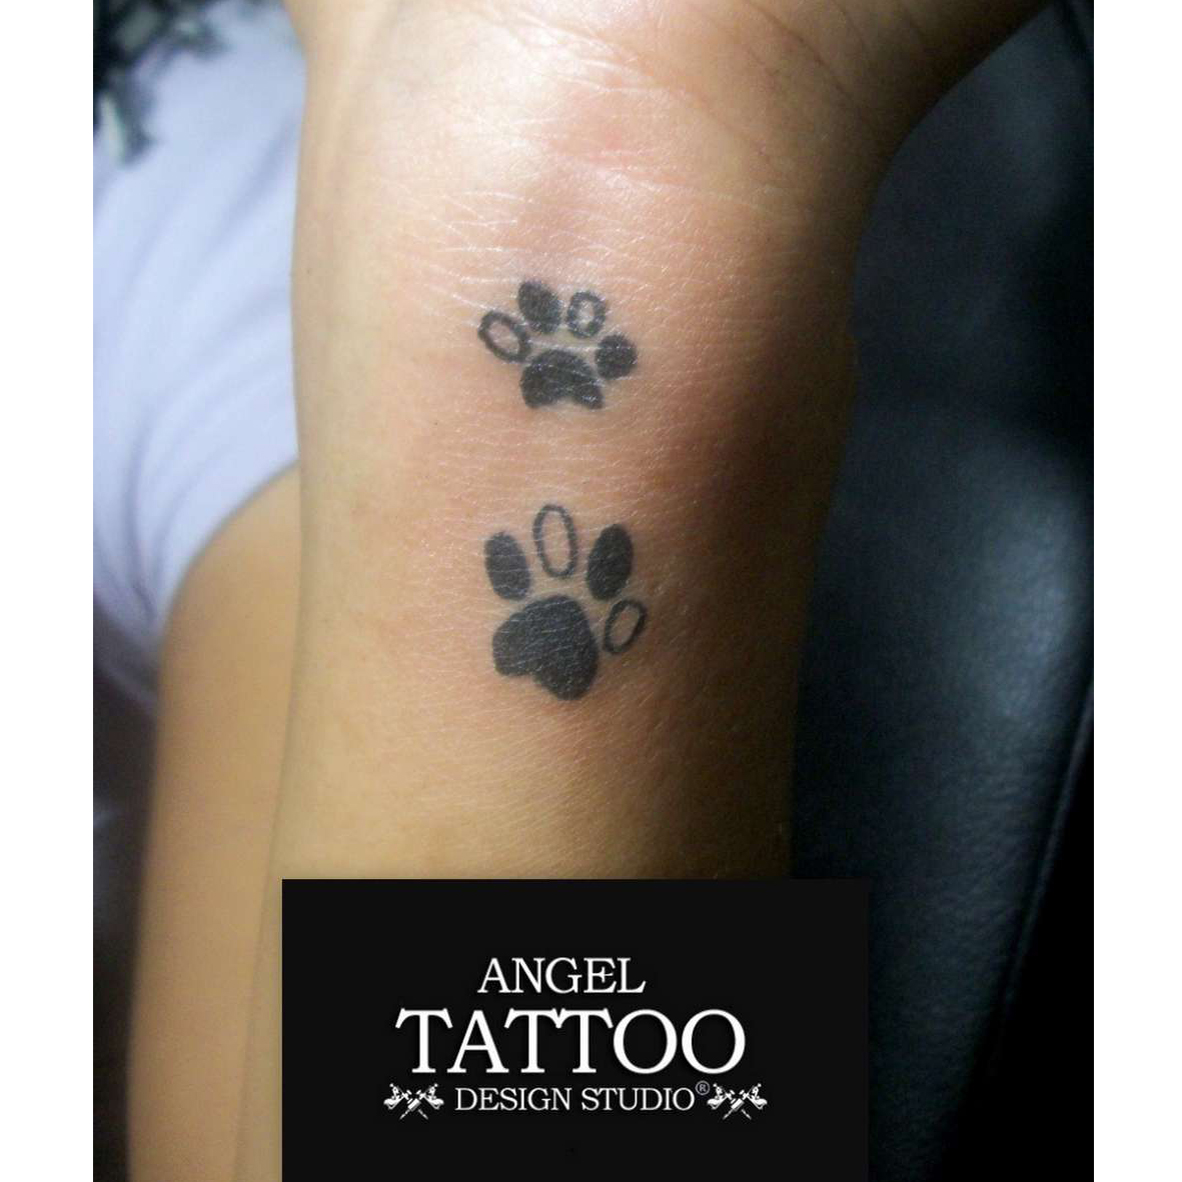 47 Tiny Paw Print Tattoos For Cat And Dog Lovers | CafeMom.com